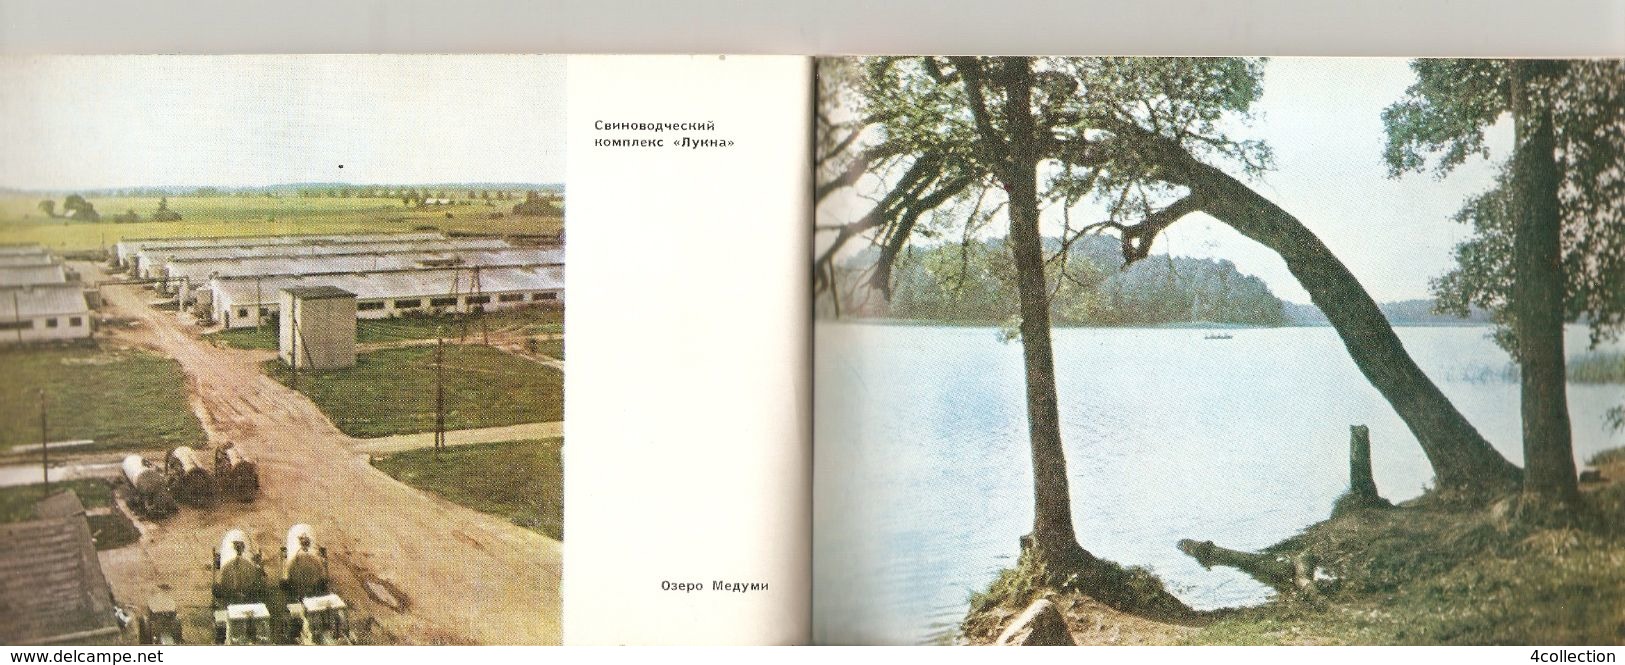 k2 Latvia Daugavpils area region district USSR Soviet illustrated guidebook tourist book vintage travel guide Avots 1983